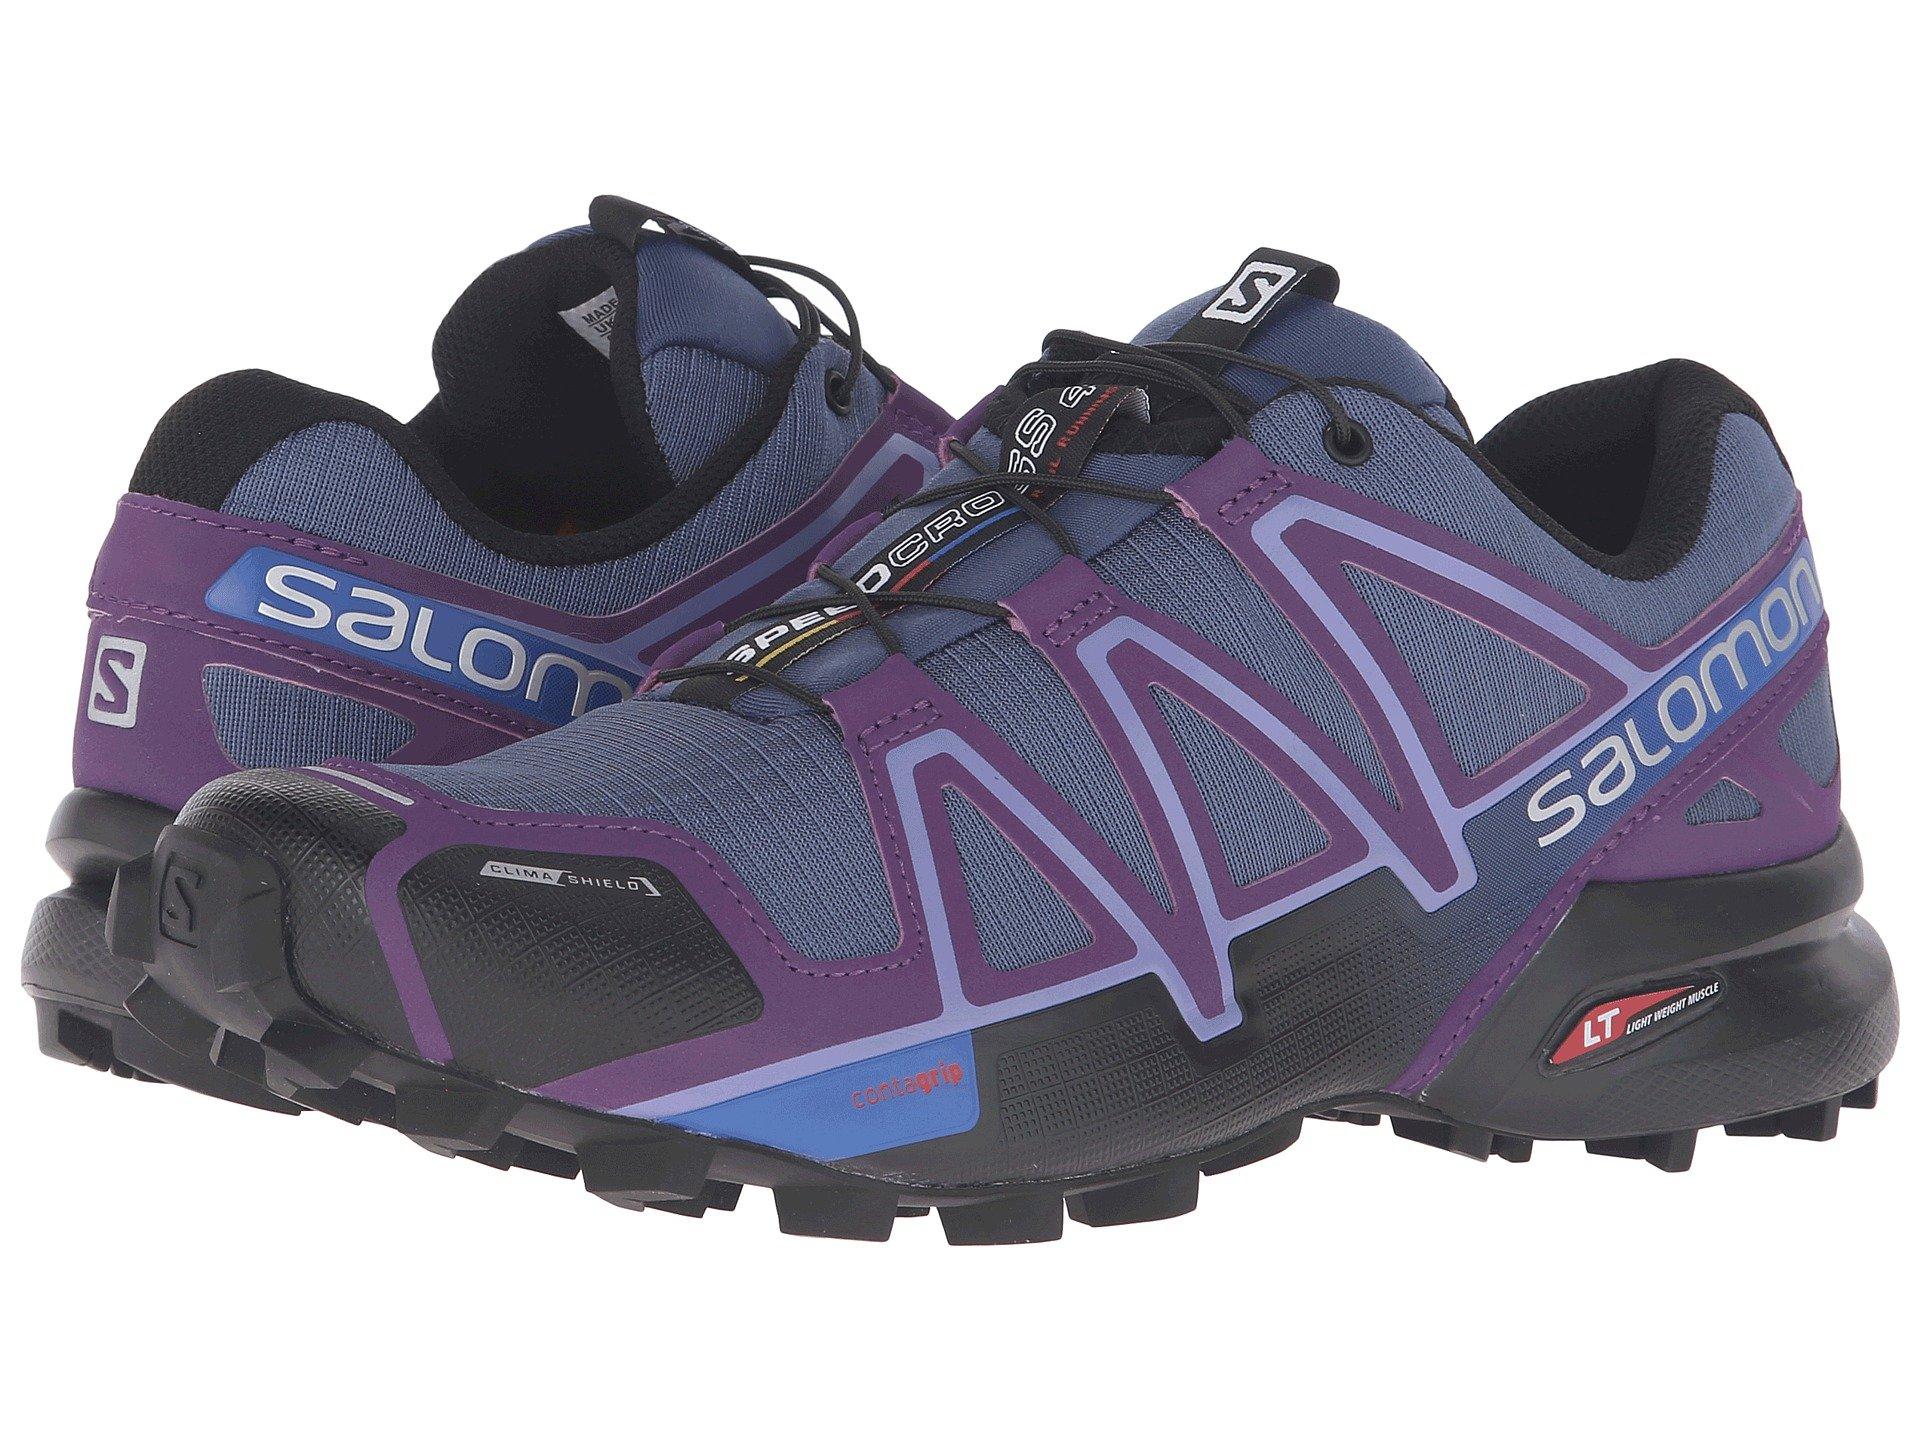 Women's Salomon Speedcross 4 CS slateblue/cosmic purple/black